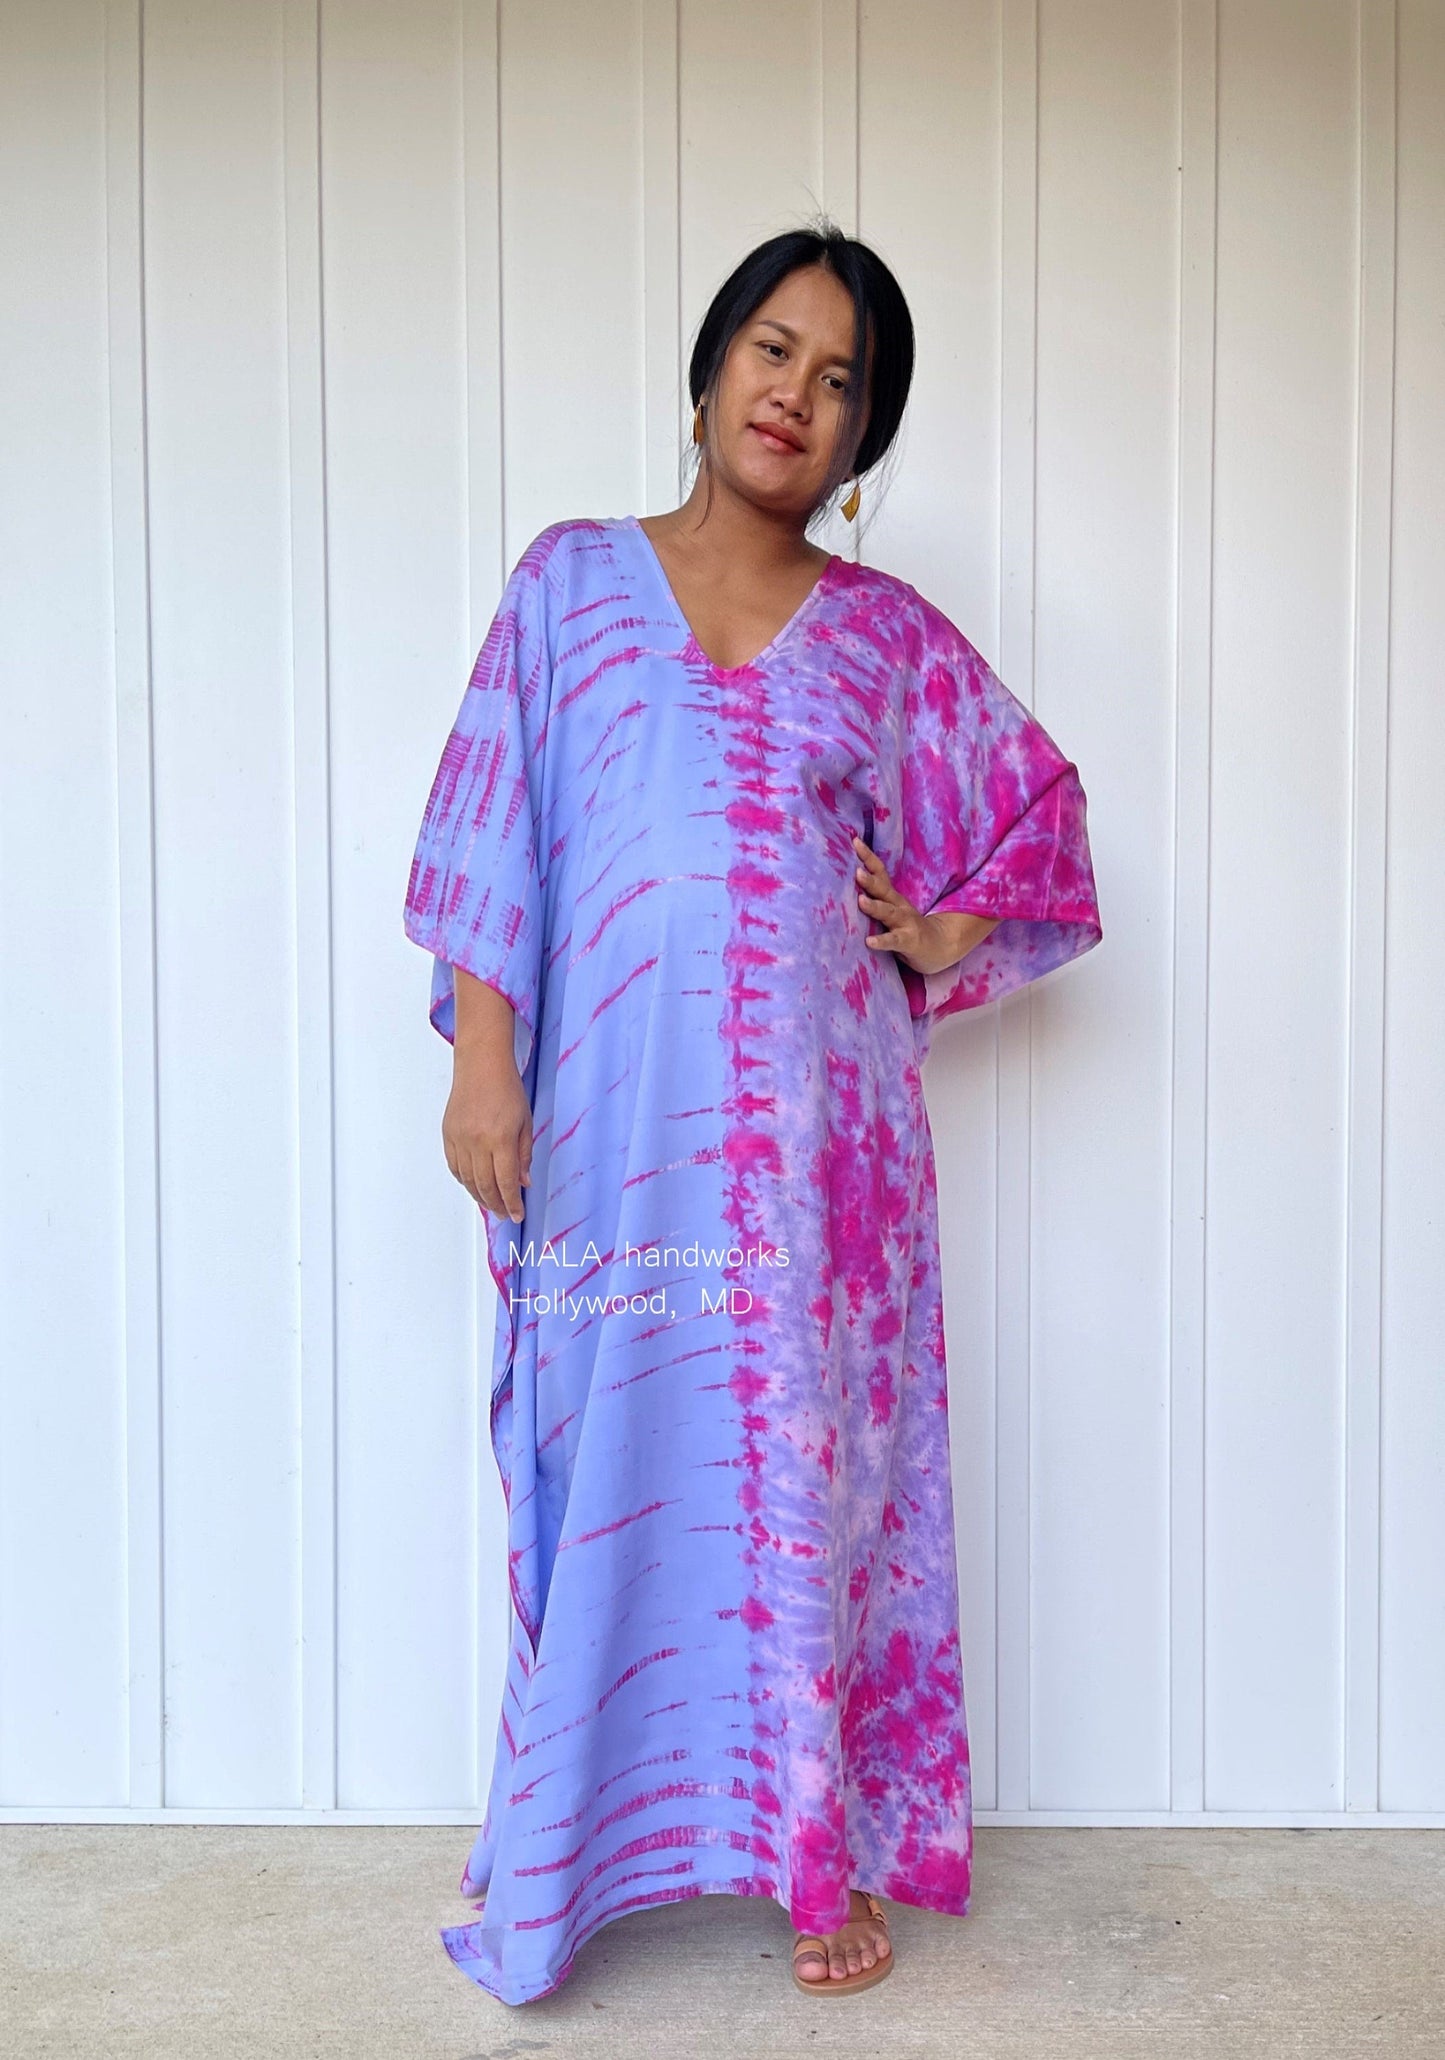 MALA handworks  Mala Kaftan in Lavender and Pink Tie Dye